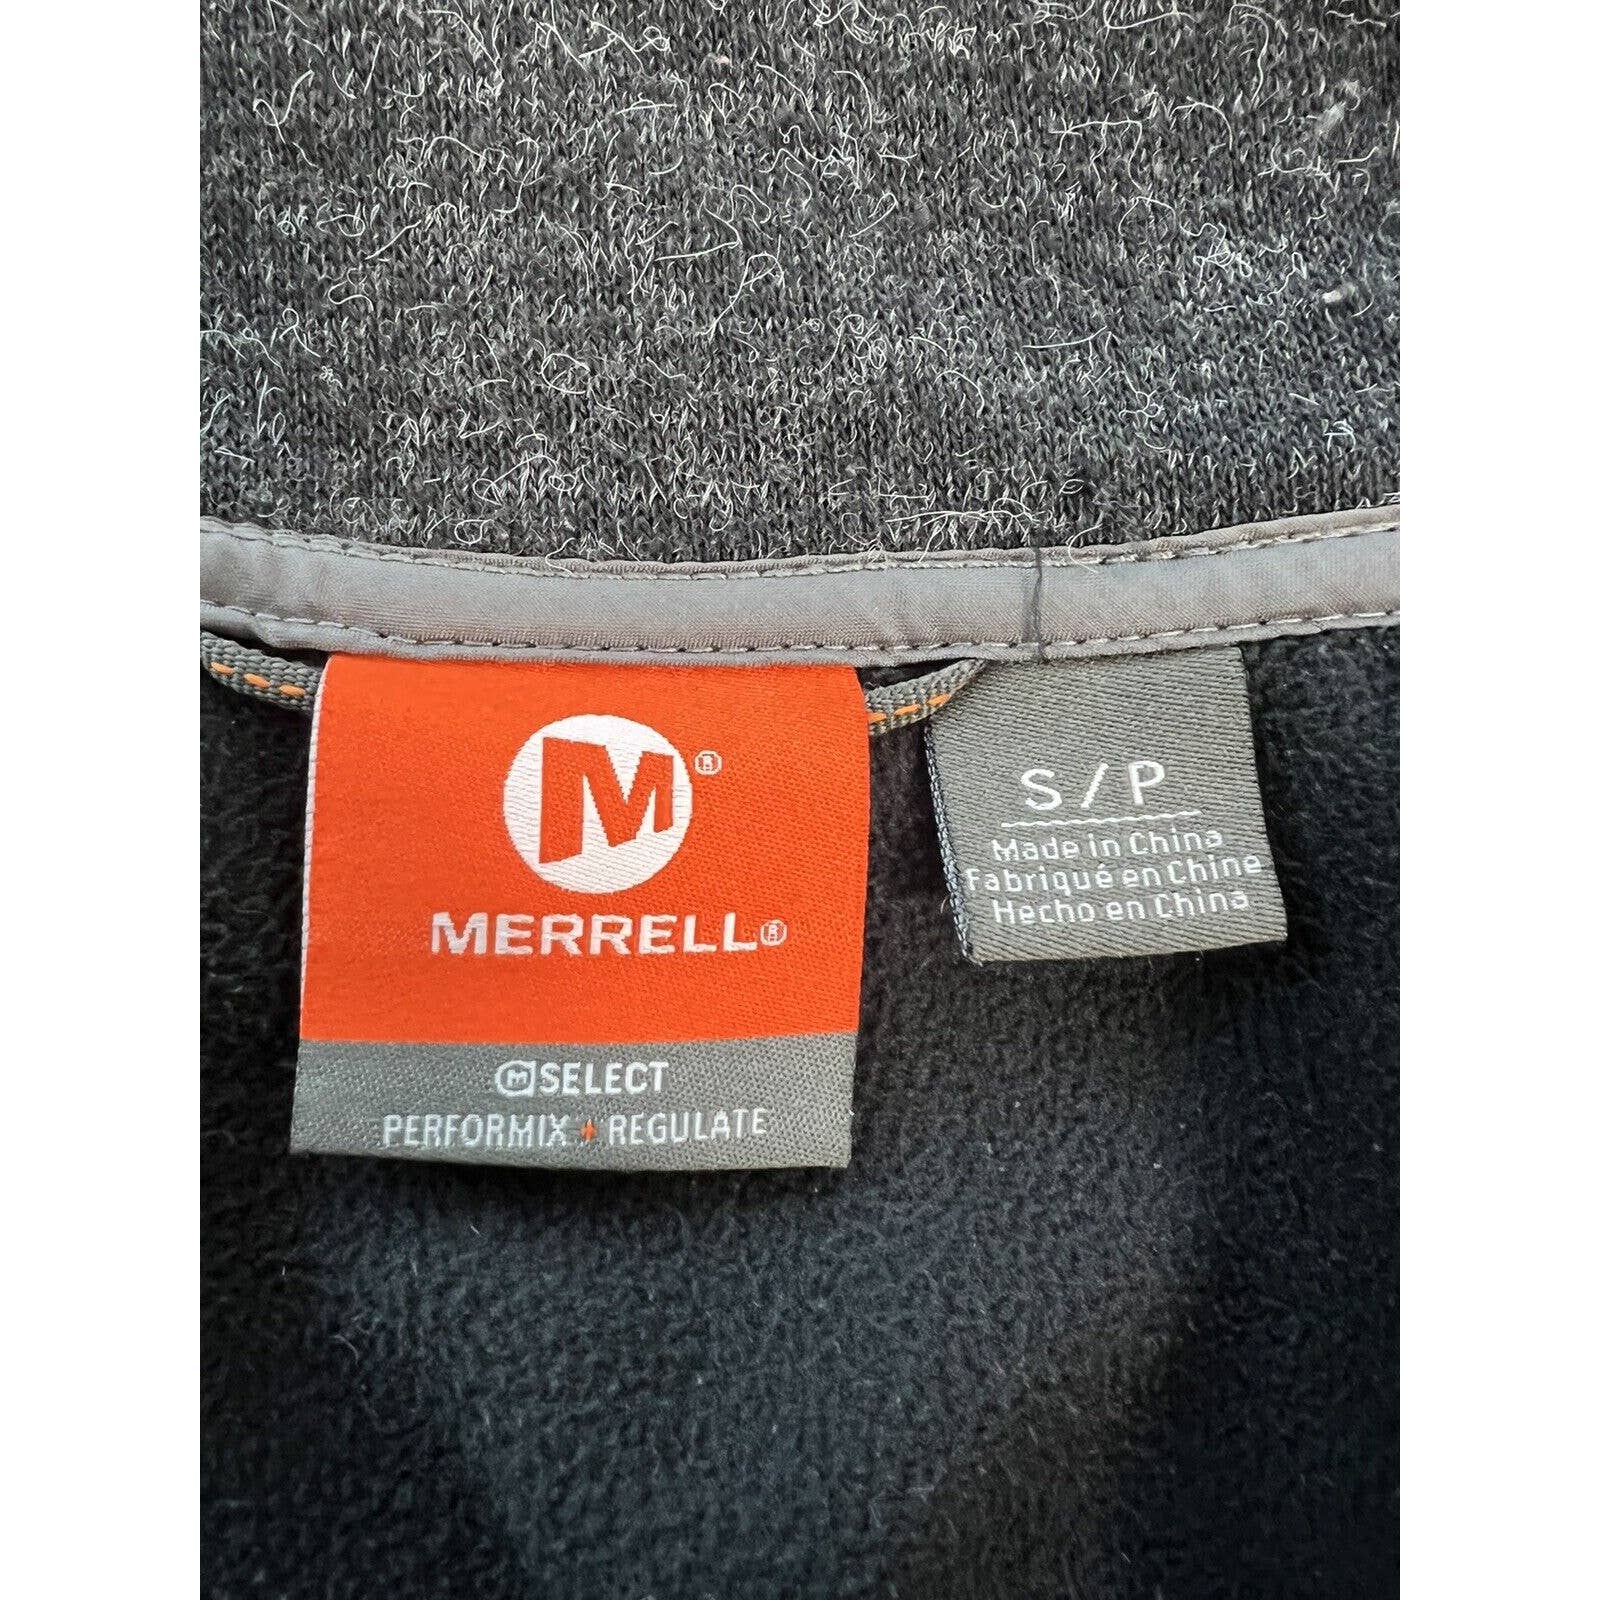 Merrell Performix Regulate Sweater Jacket Women's Small Charcoal Gray Long Coat